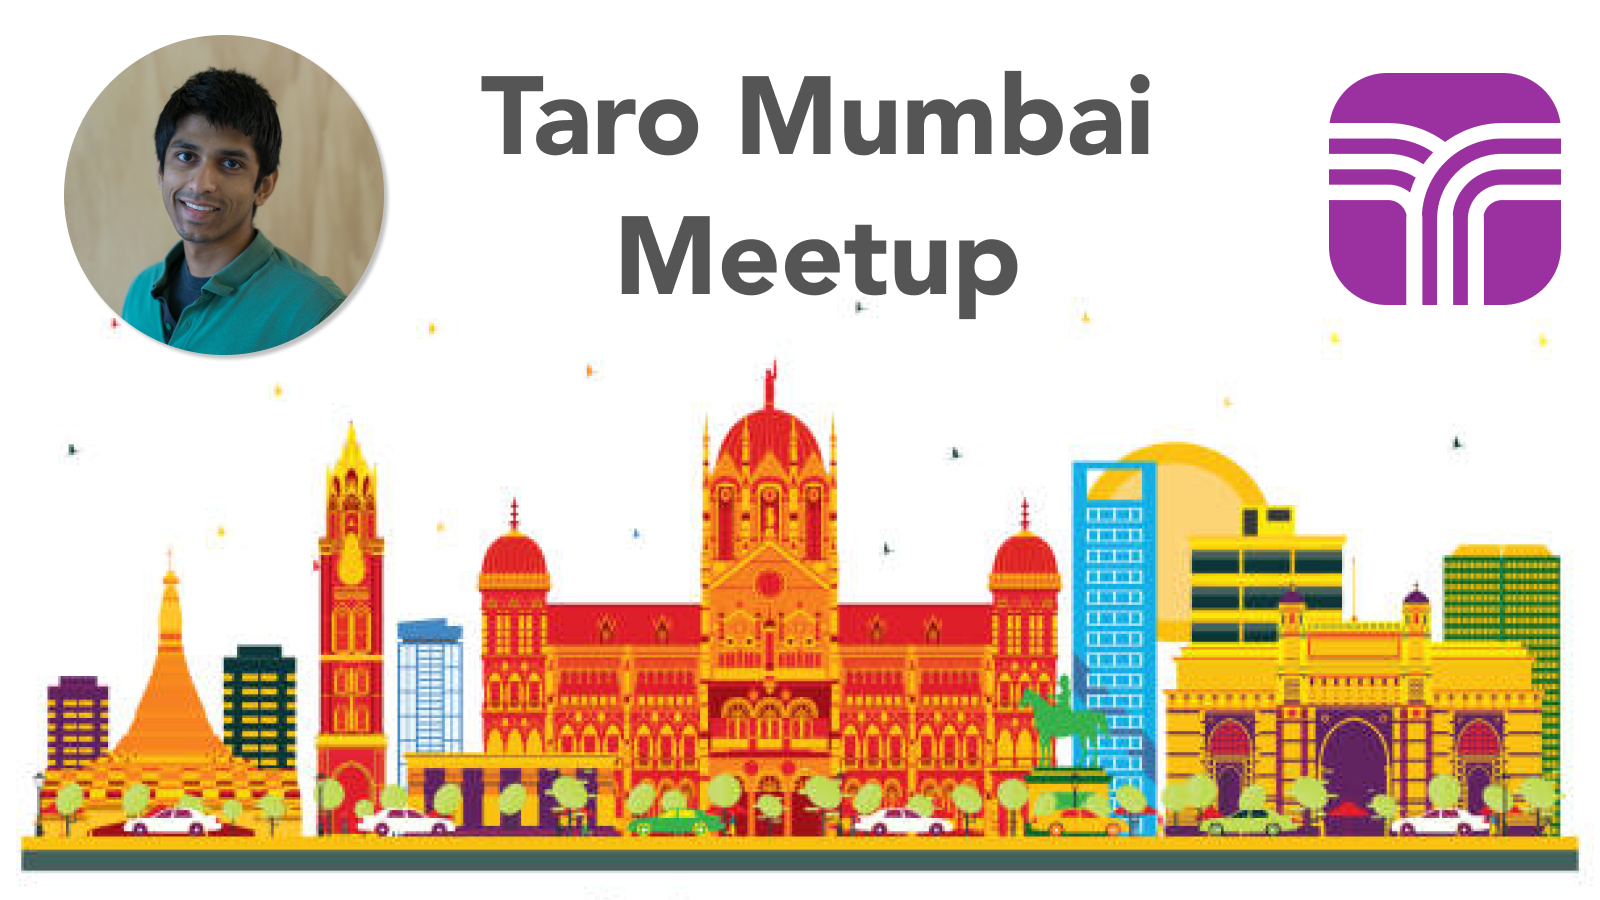 Taro Mumbai Meetup (with Rahul!) event